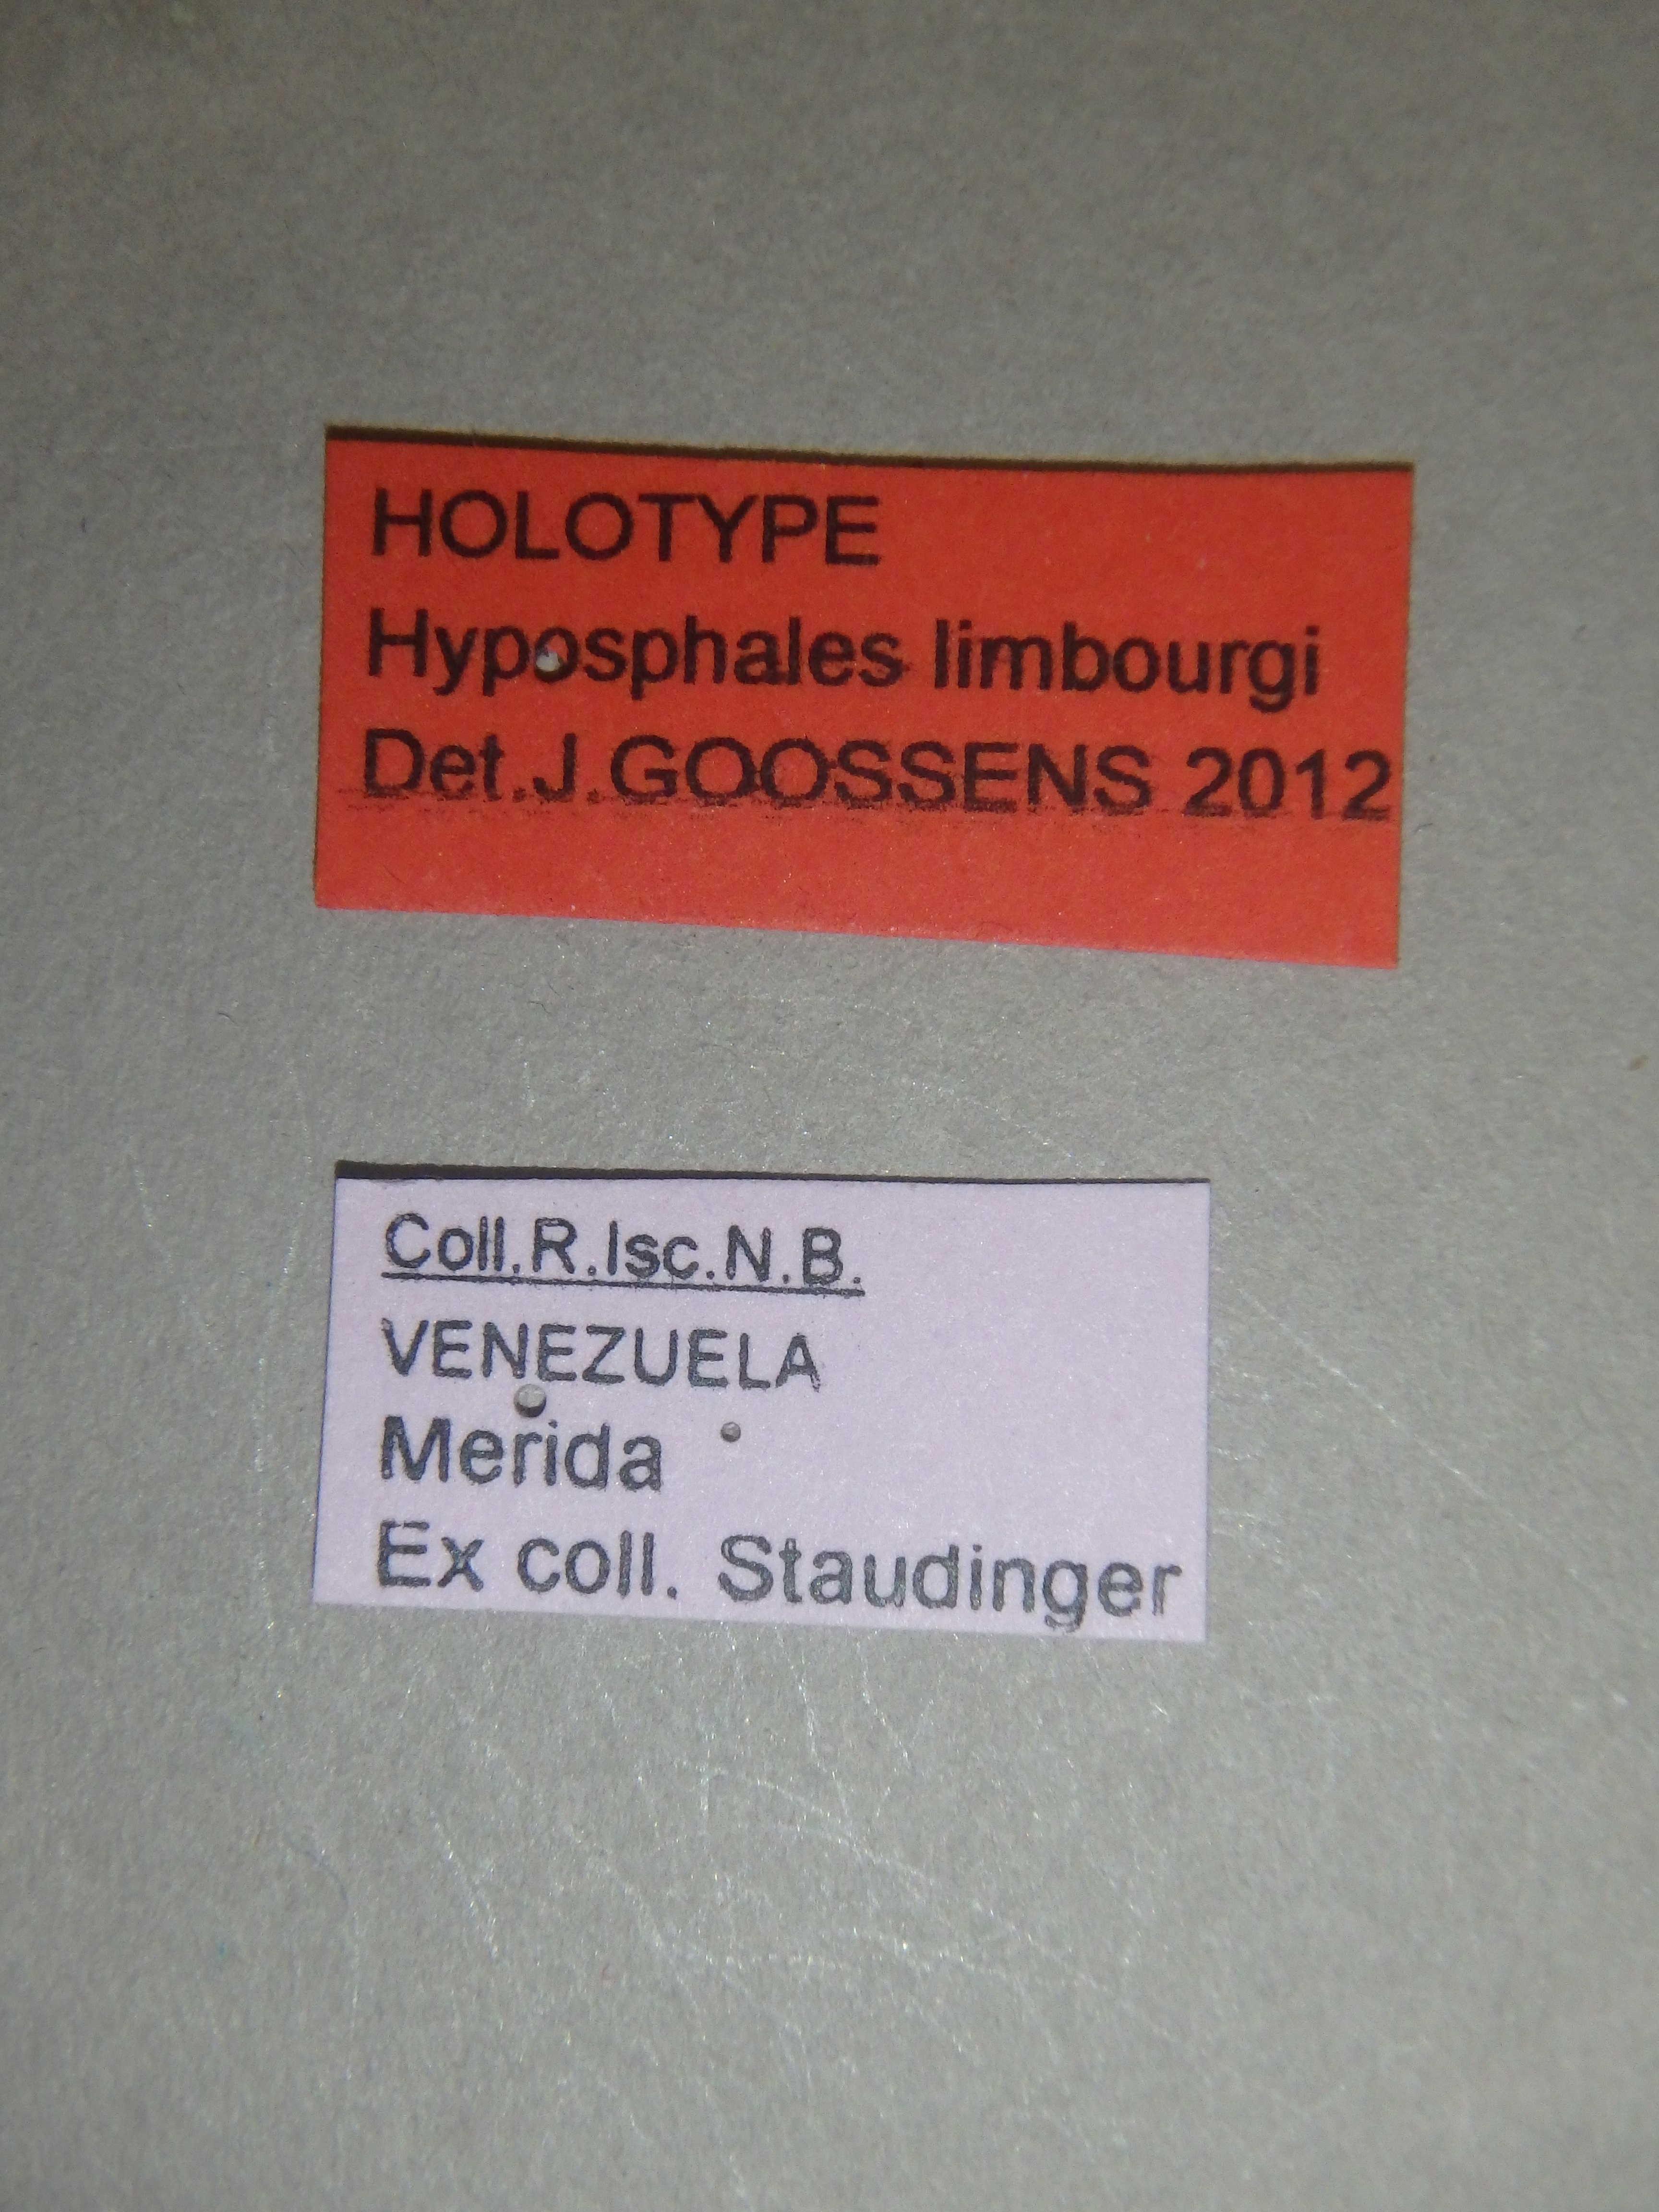 Hyposphales limbourgi ht Labels.jpg